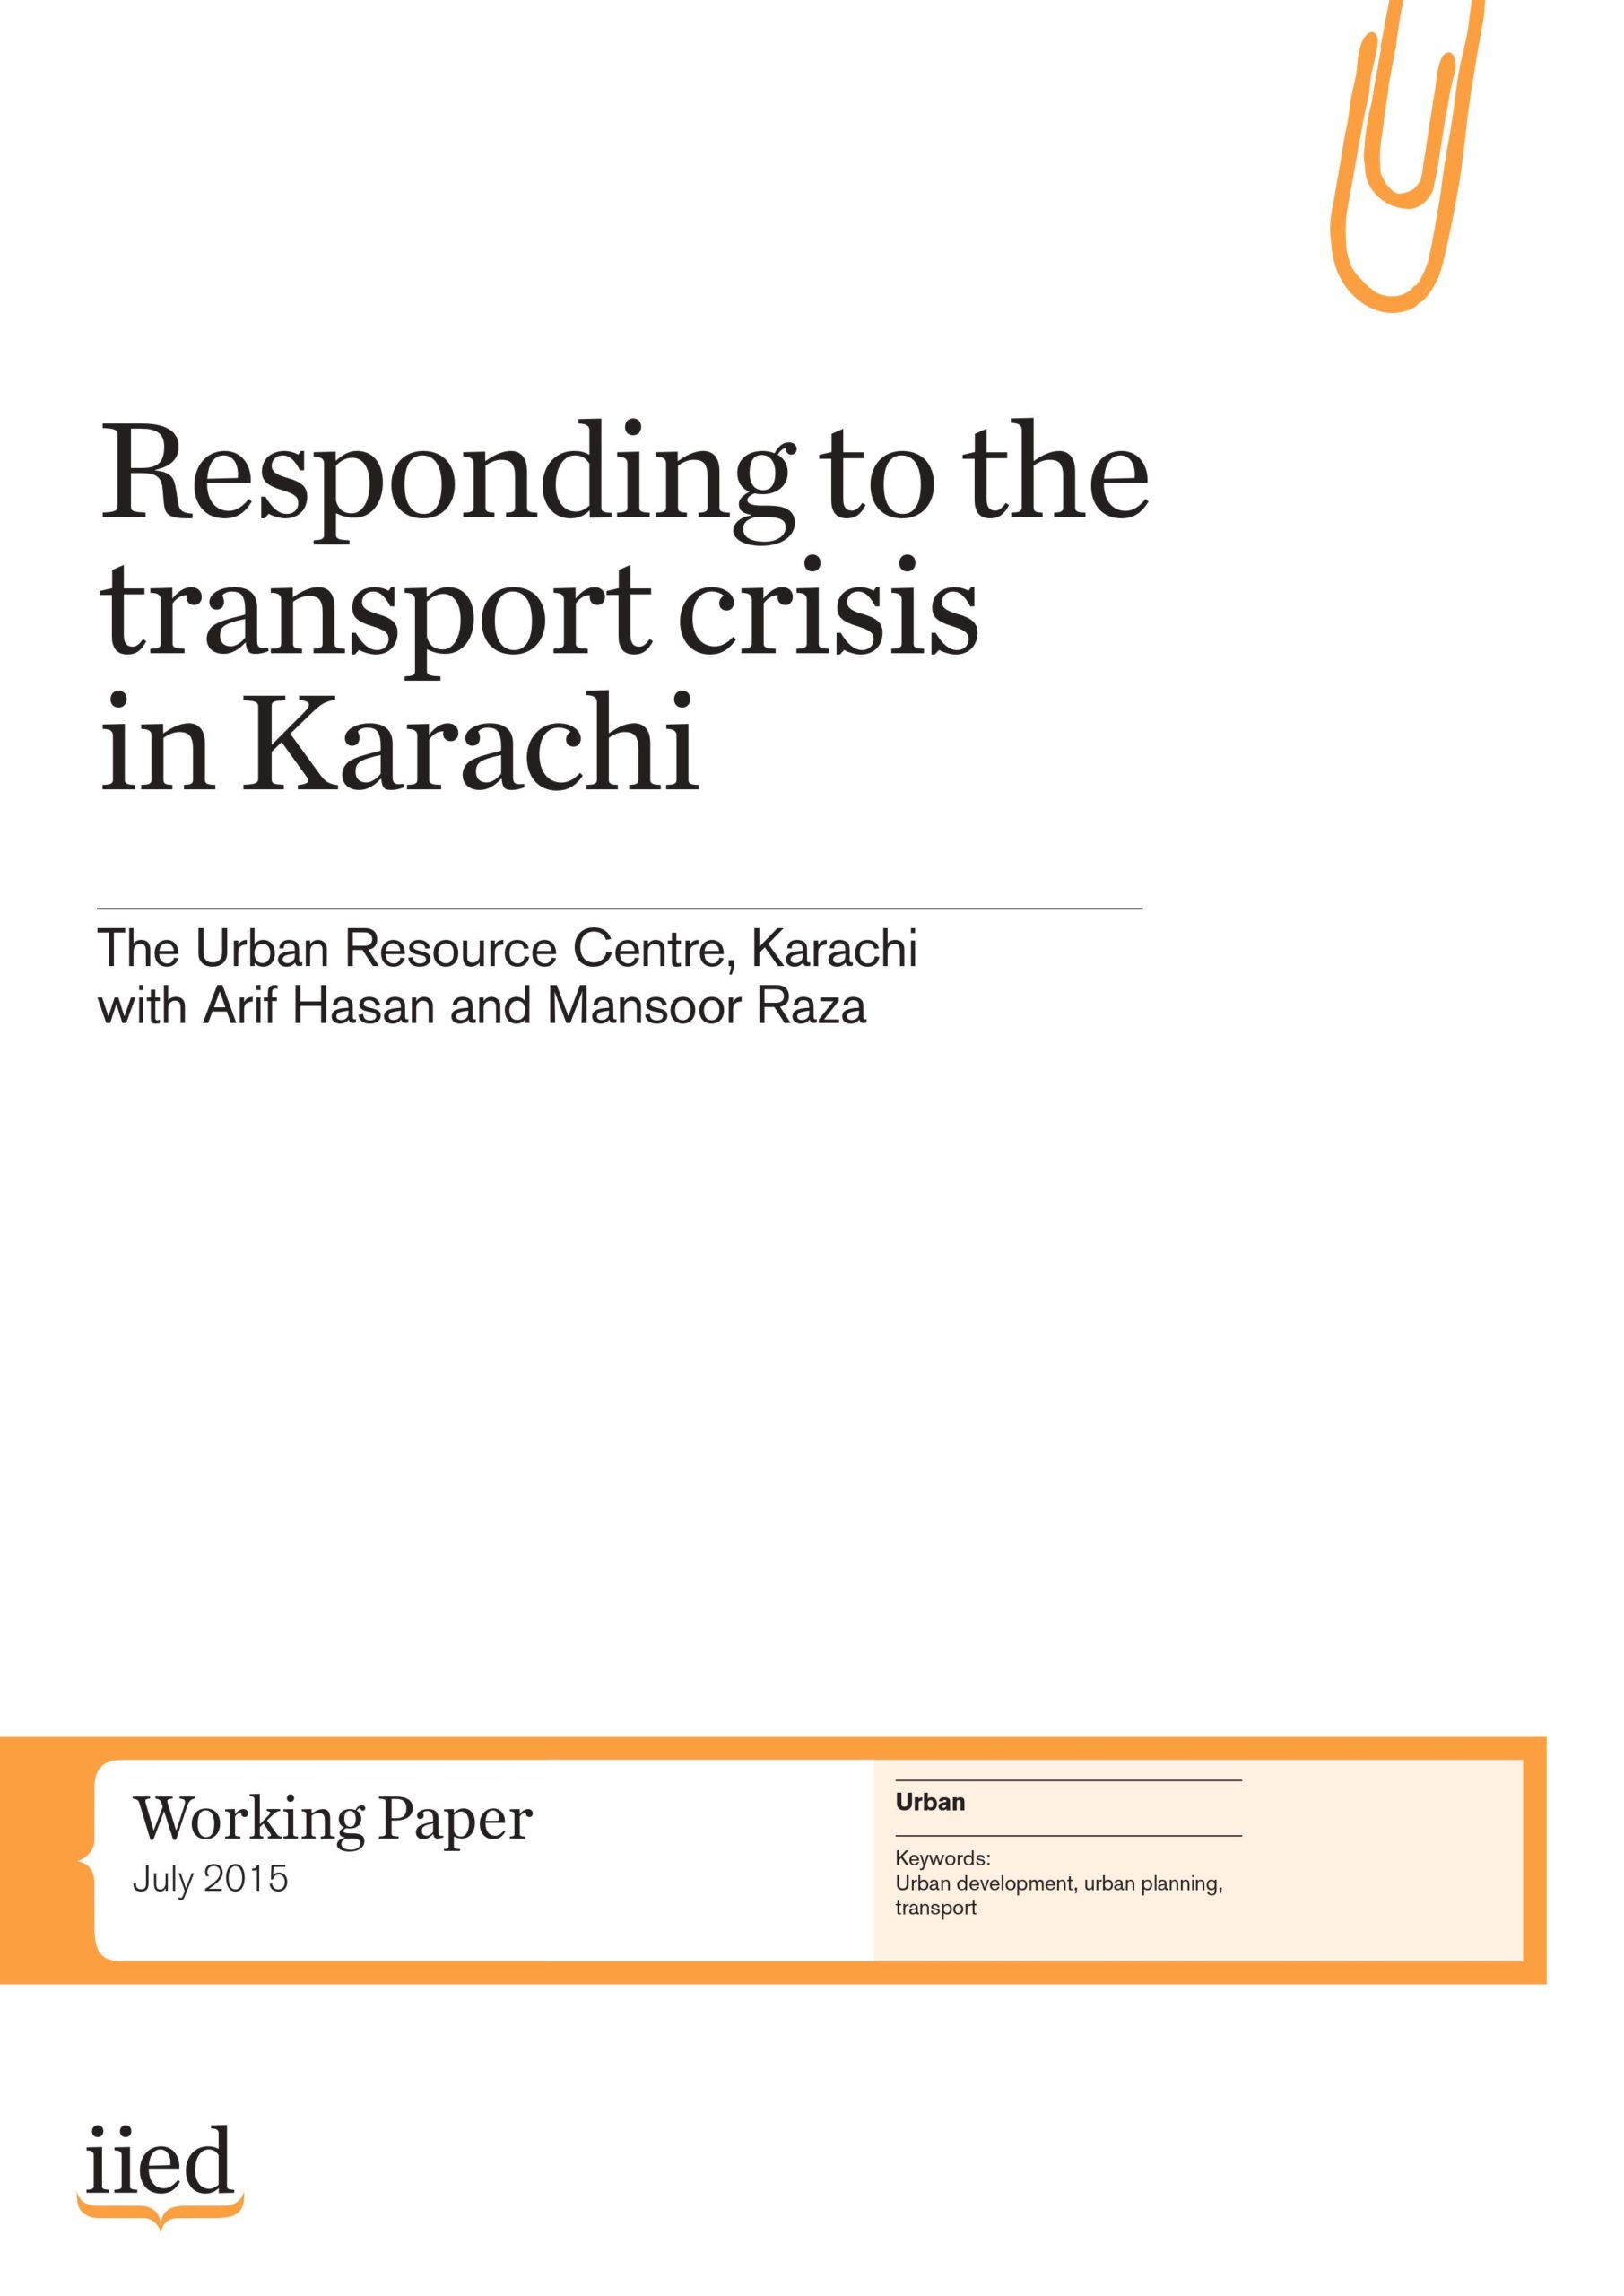 Responding to the Transport Crisis in Karachi